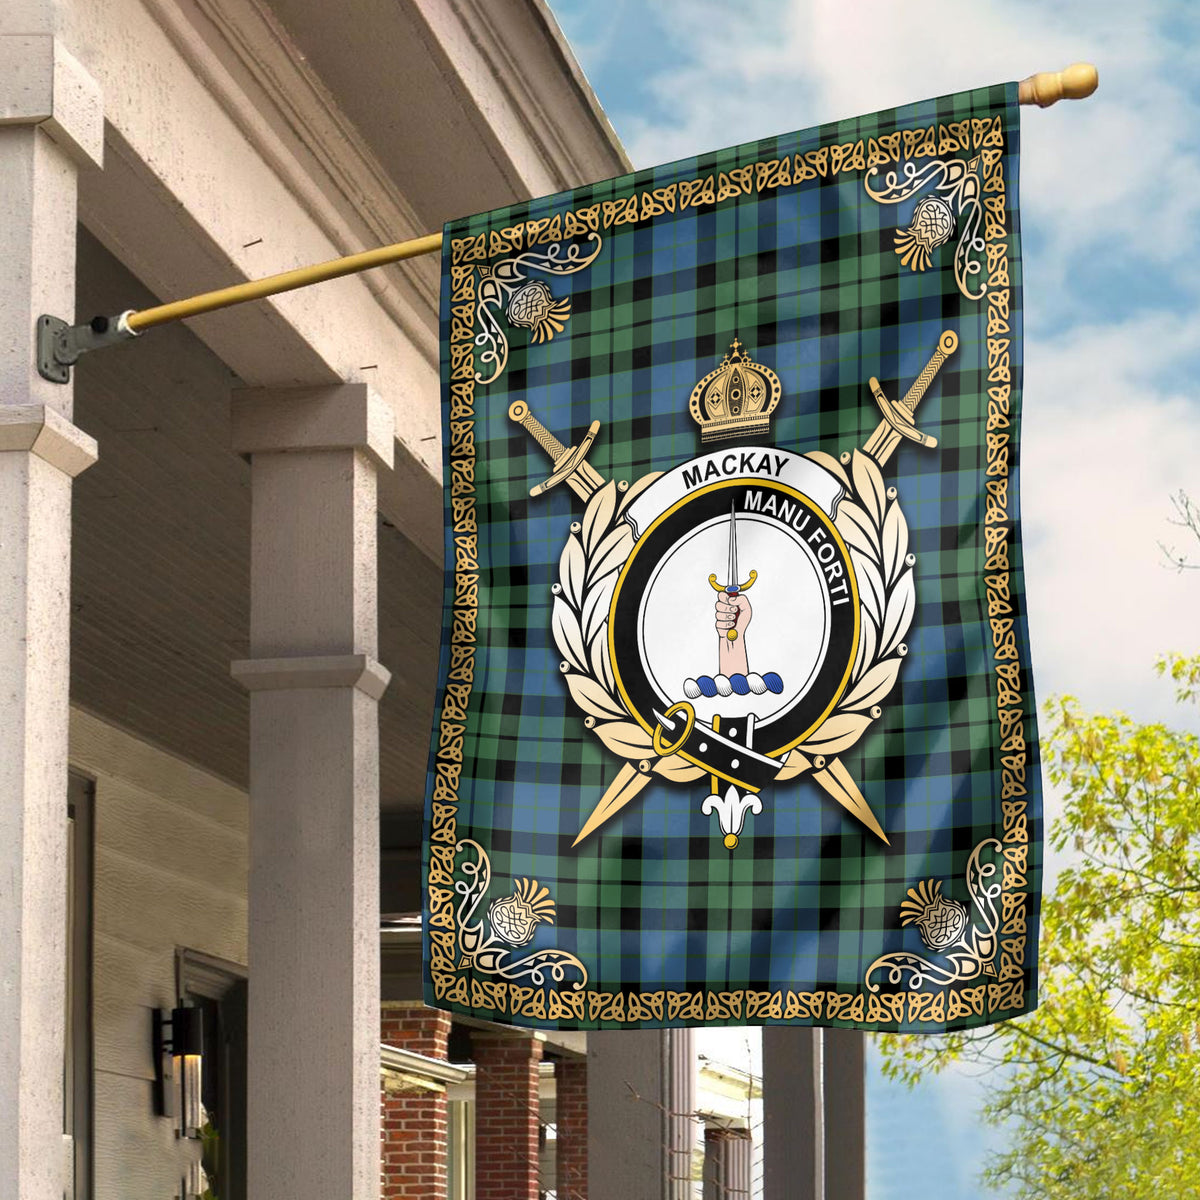 MacKay Ancient Tartan Crest Garden Flag - Celtic Thistle Style